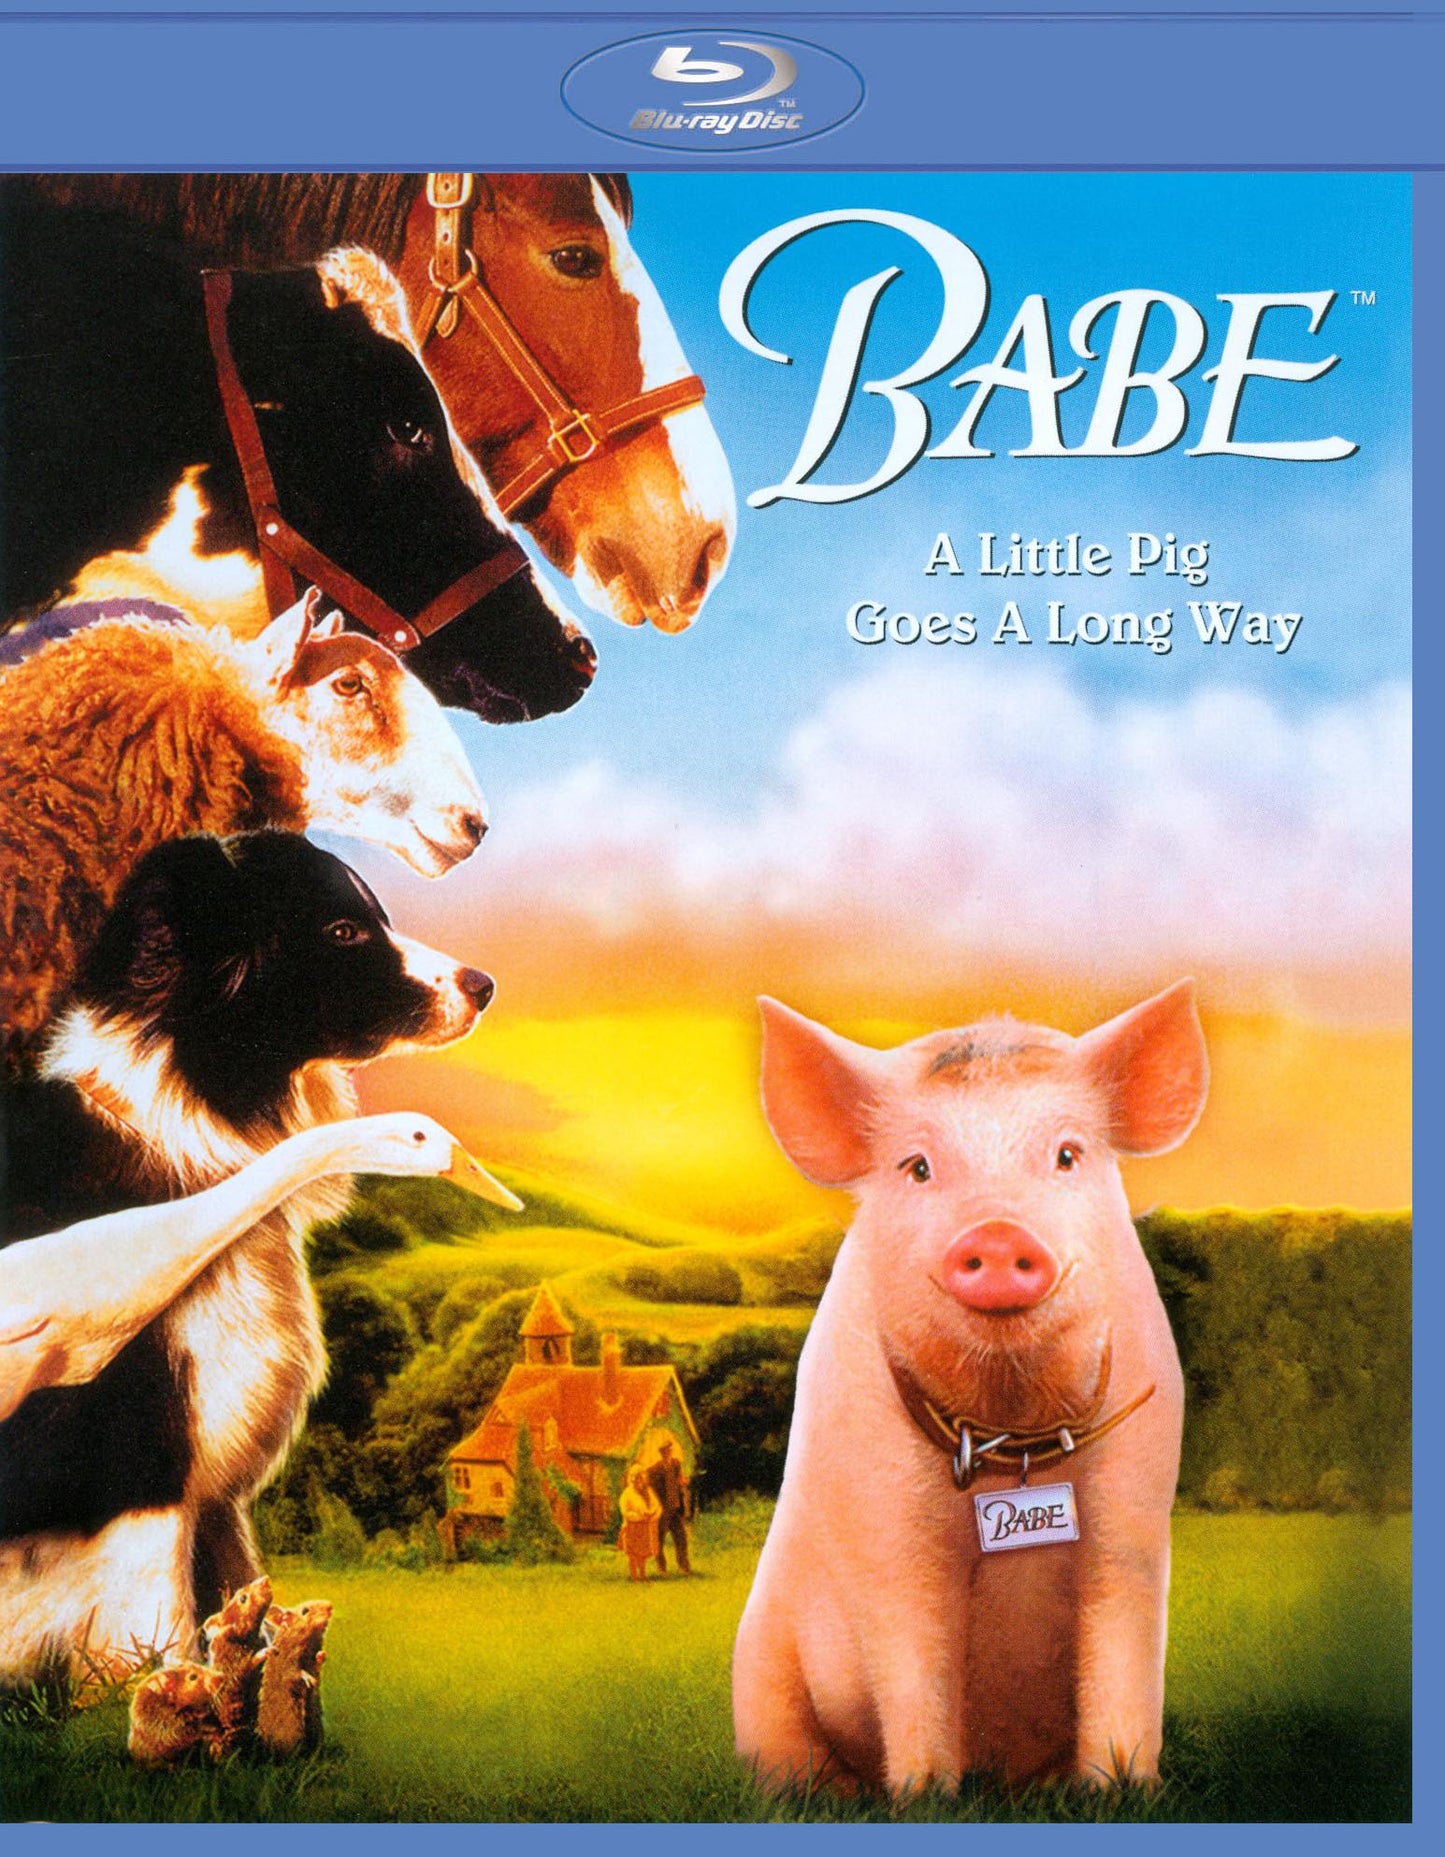 Babe [Blu-ray] cover art